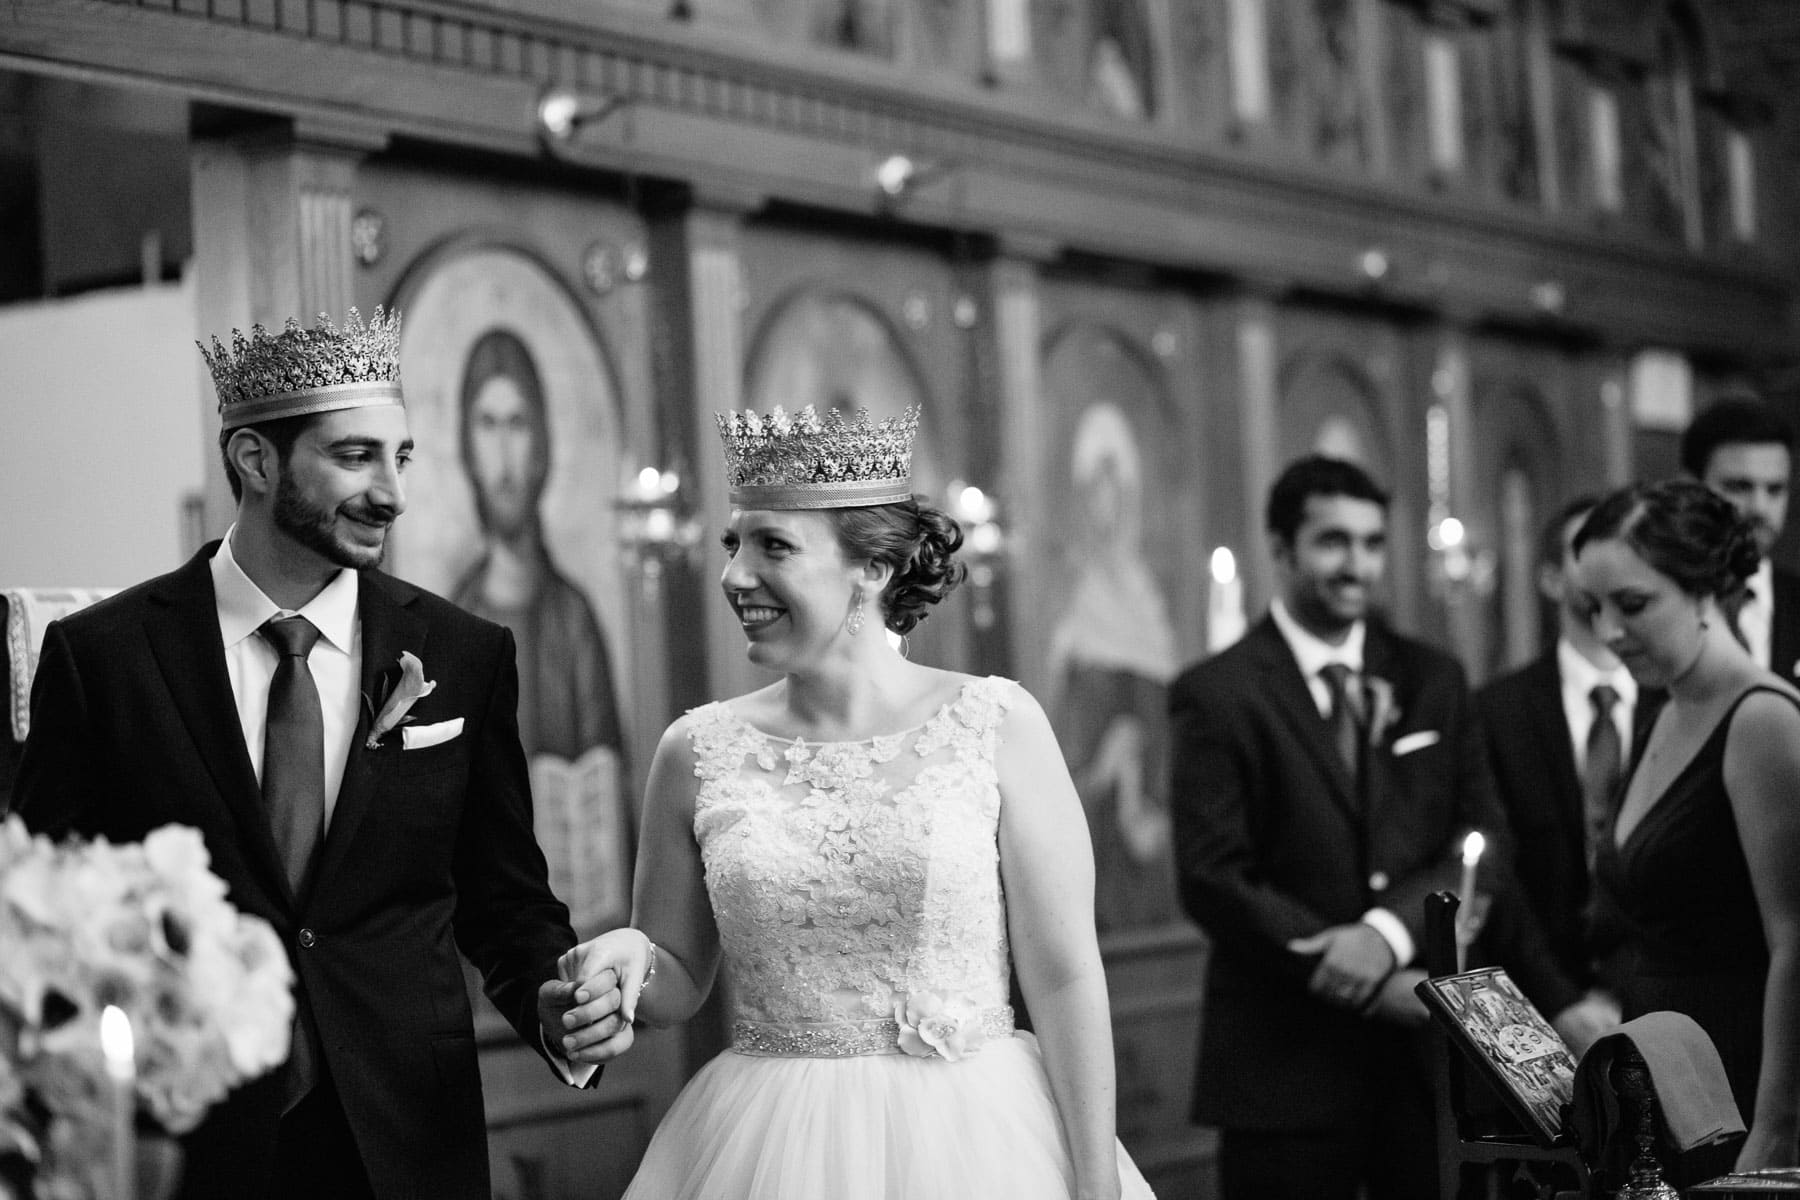 Lauren and George's wedding ceremony | Kelly Benvenuto Photography | Boston wedding photographer